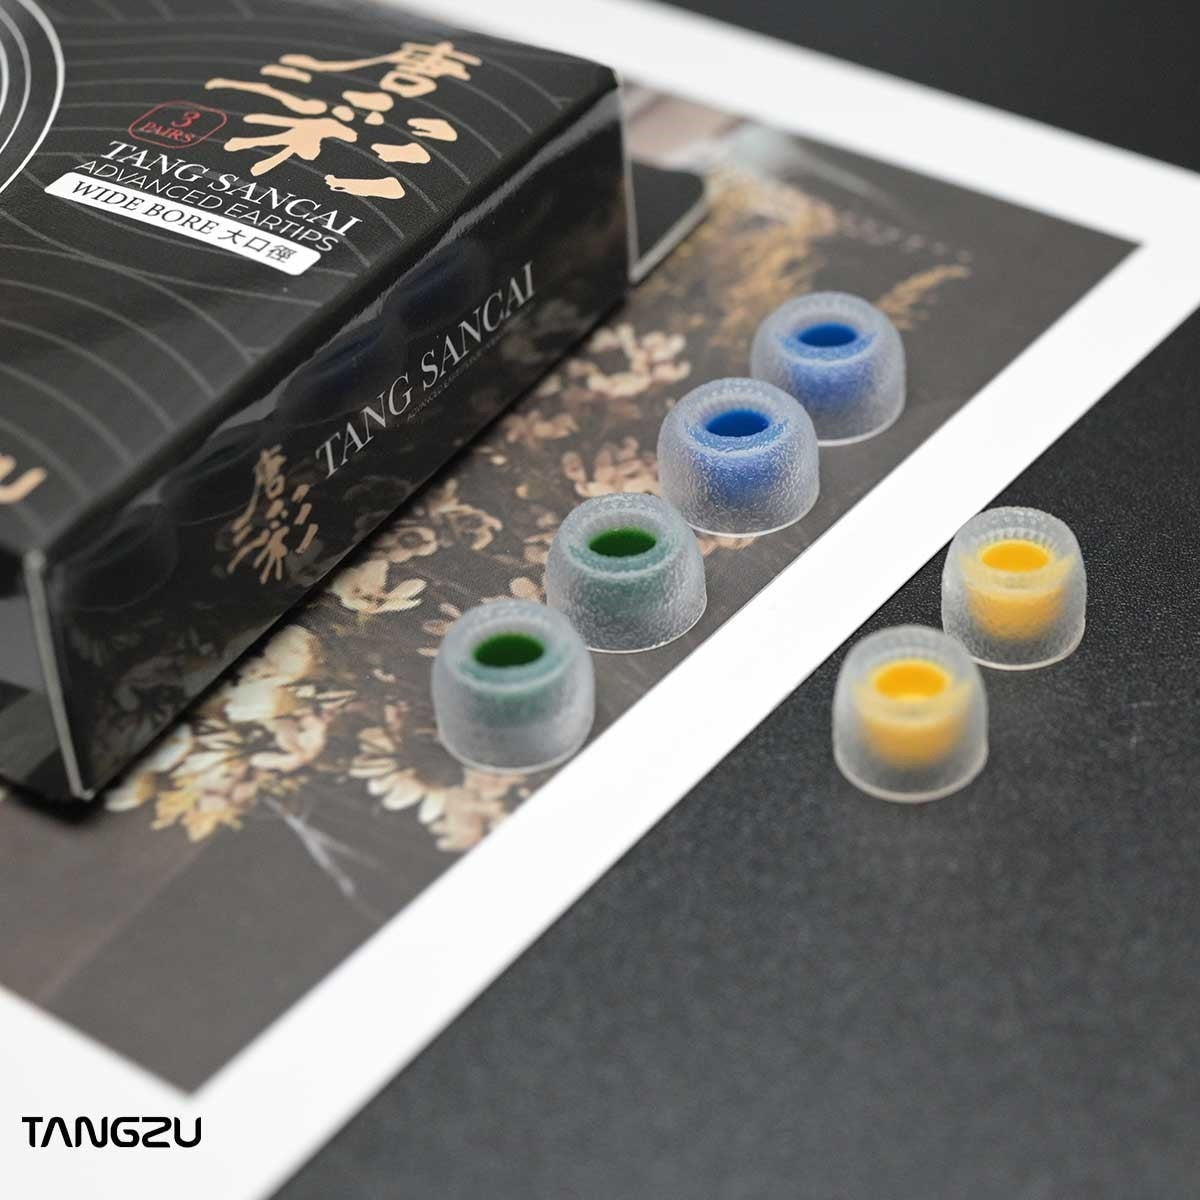 TANGZU Tang Sancai Wide Bore Version Eartips for Earphones - The HiFi Cat